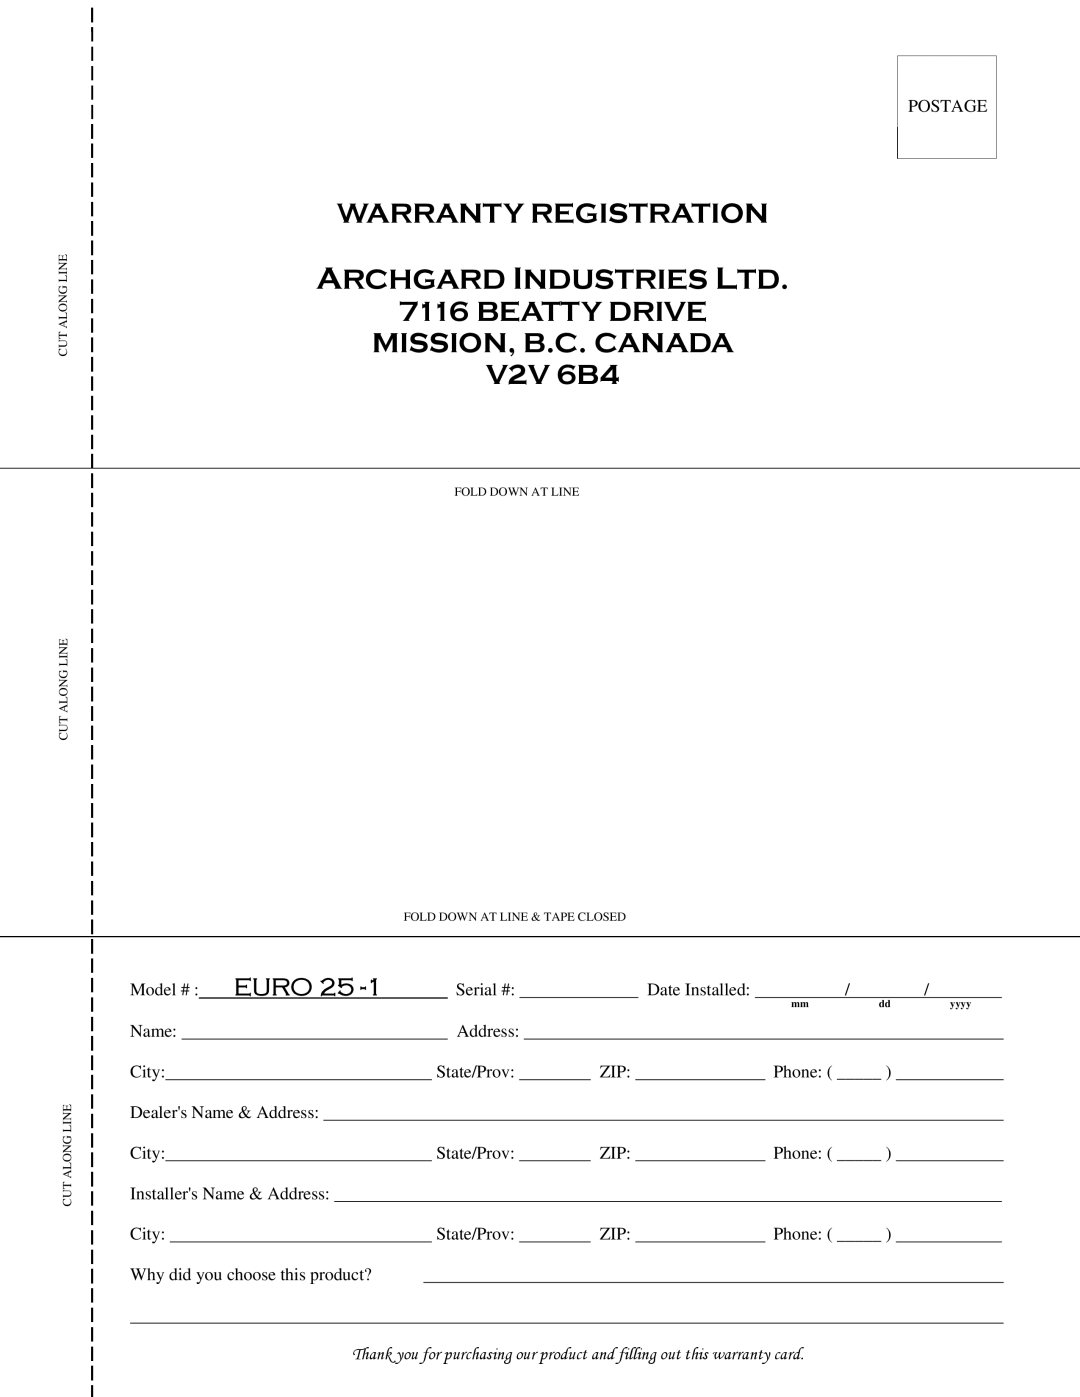 Delkin Devices EI - 25-1 manual BEATTY DRIVE MISSION, B.C. CANADA V2V 6B4, Euro 